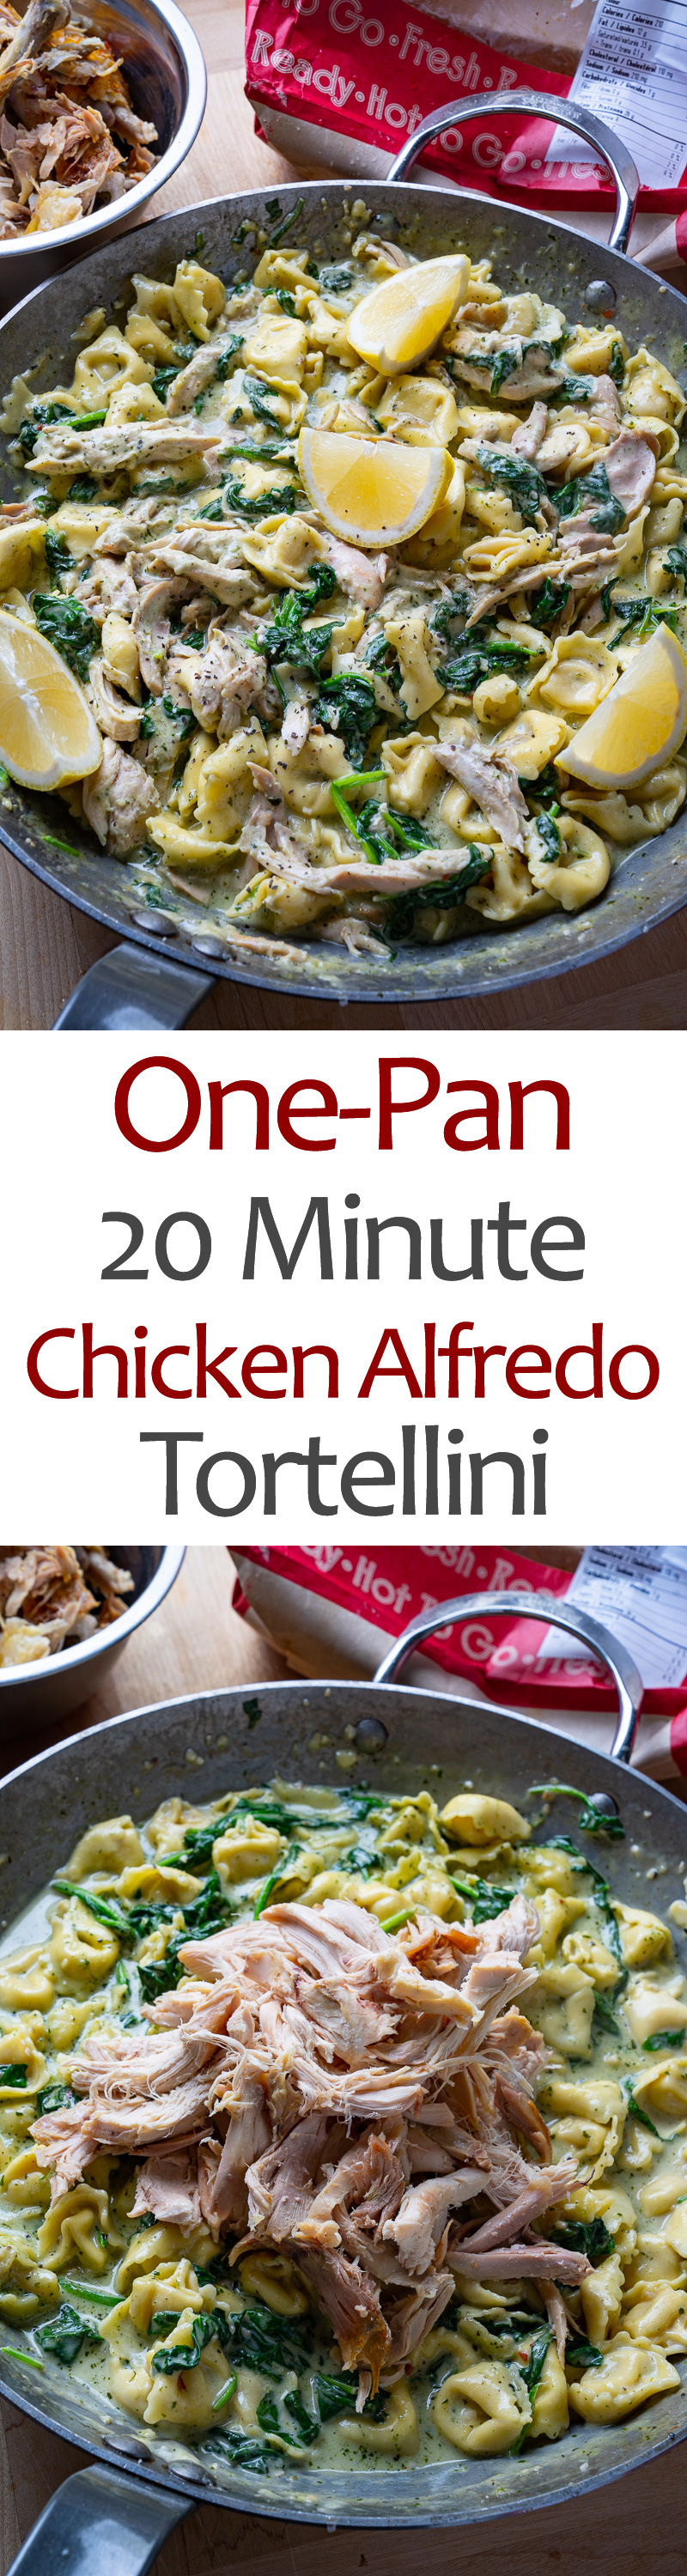 One Pan 20 Minute Chicken Alfredo Tortellini